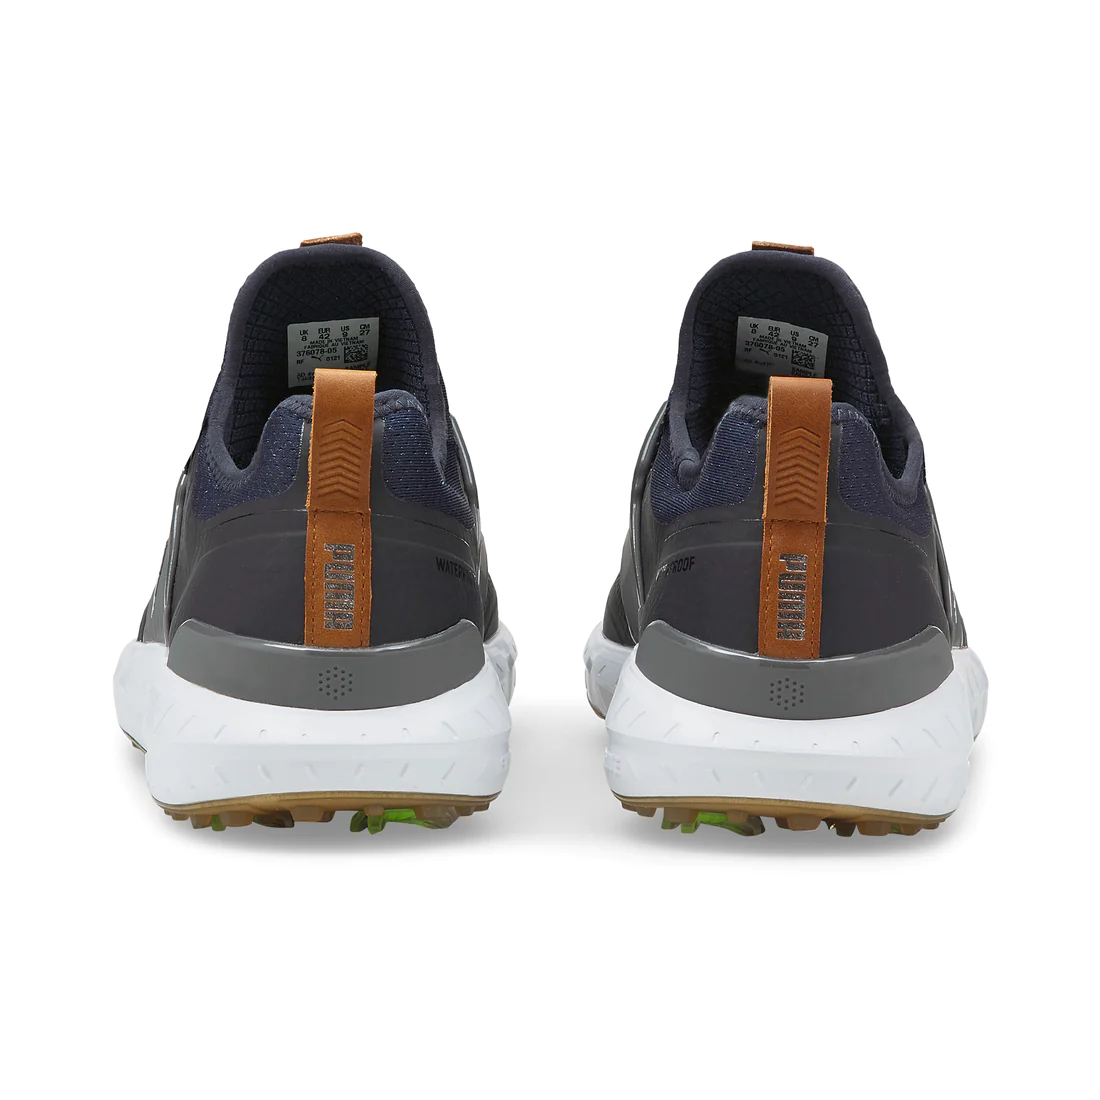 Puma Ignite Articulate 376078-05 Size 8.5 Medium Golf Shoes Men - image 5 of 6